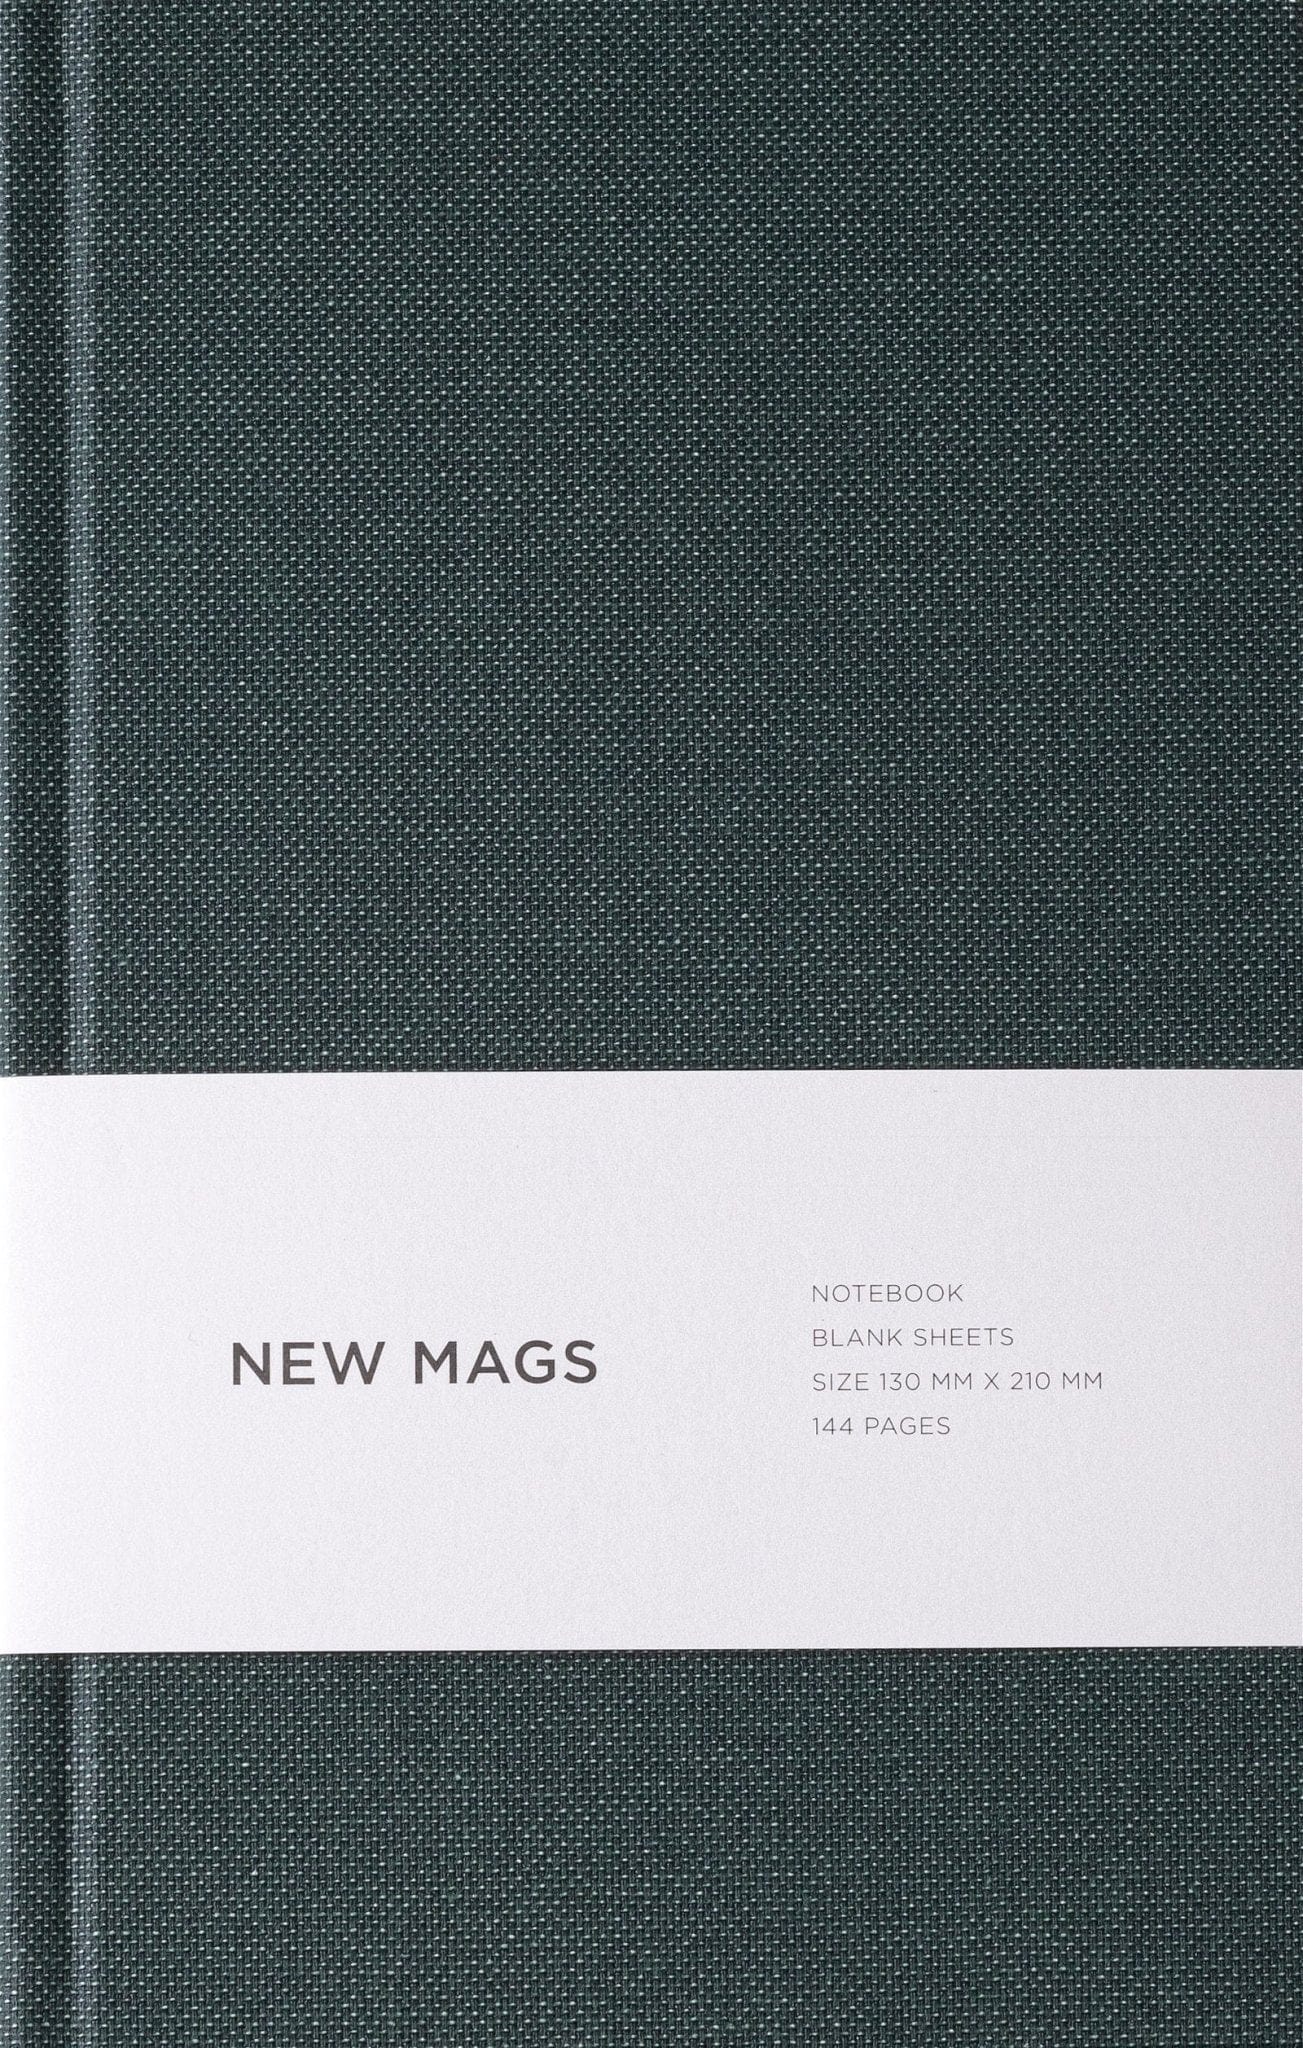 NewMags Agenda Notebook Moss Green - Hardcover/Blank, in Limba Engleza